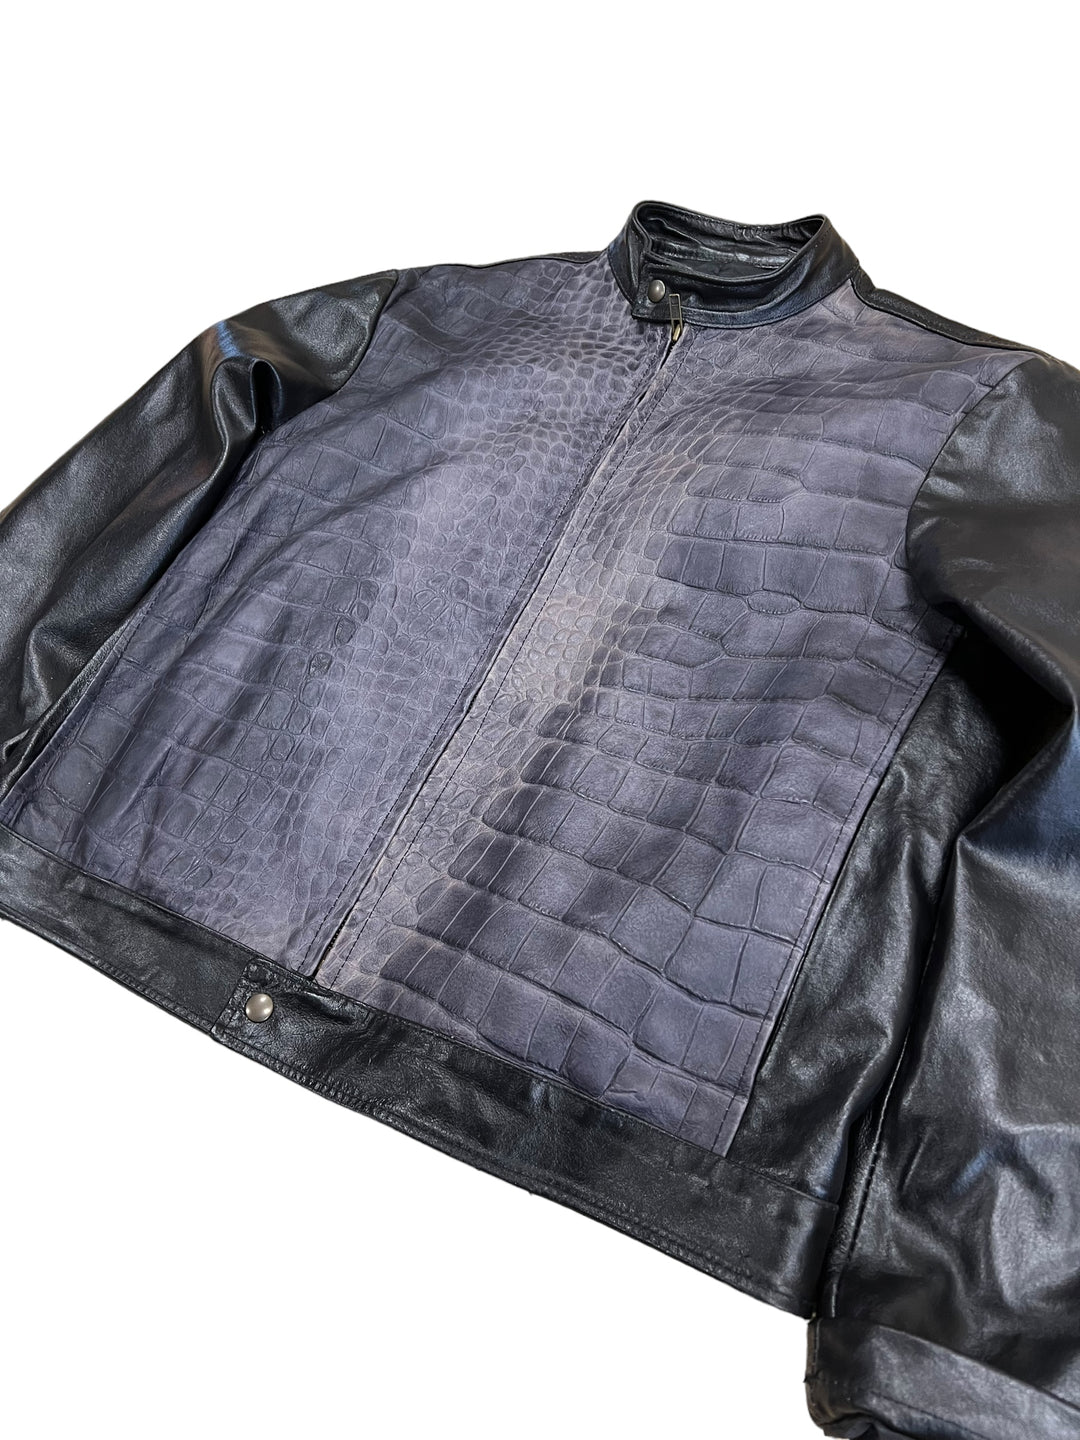 Vintage leather jacket women’s Large